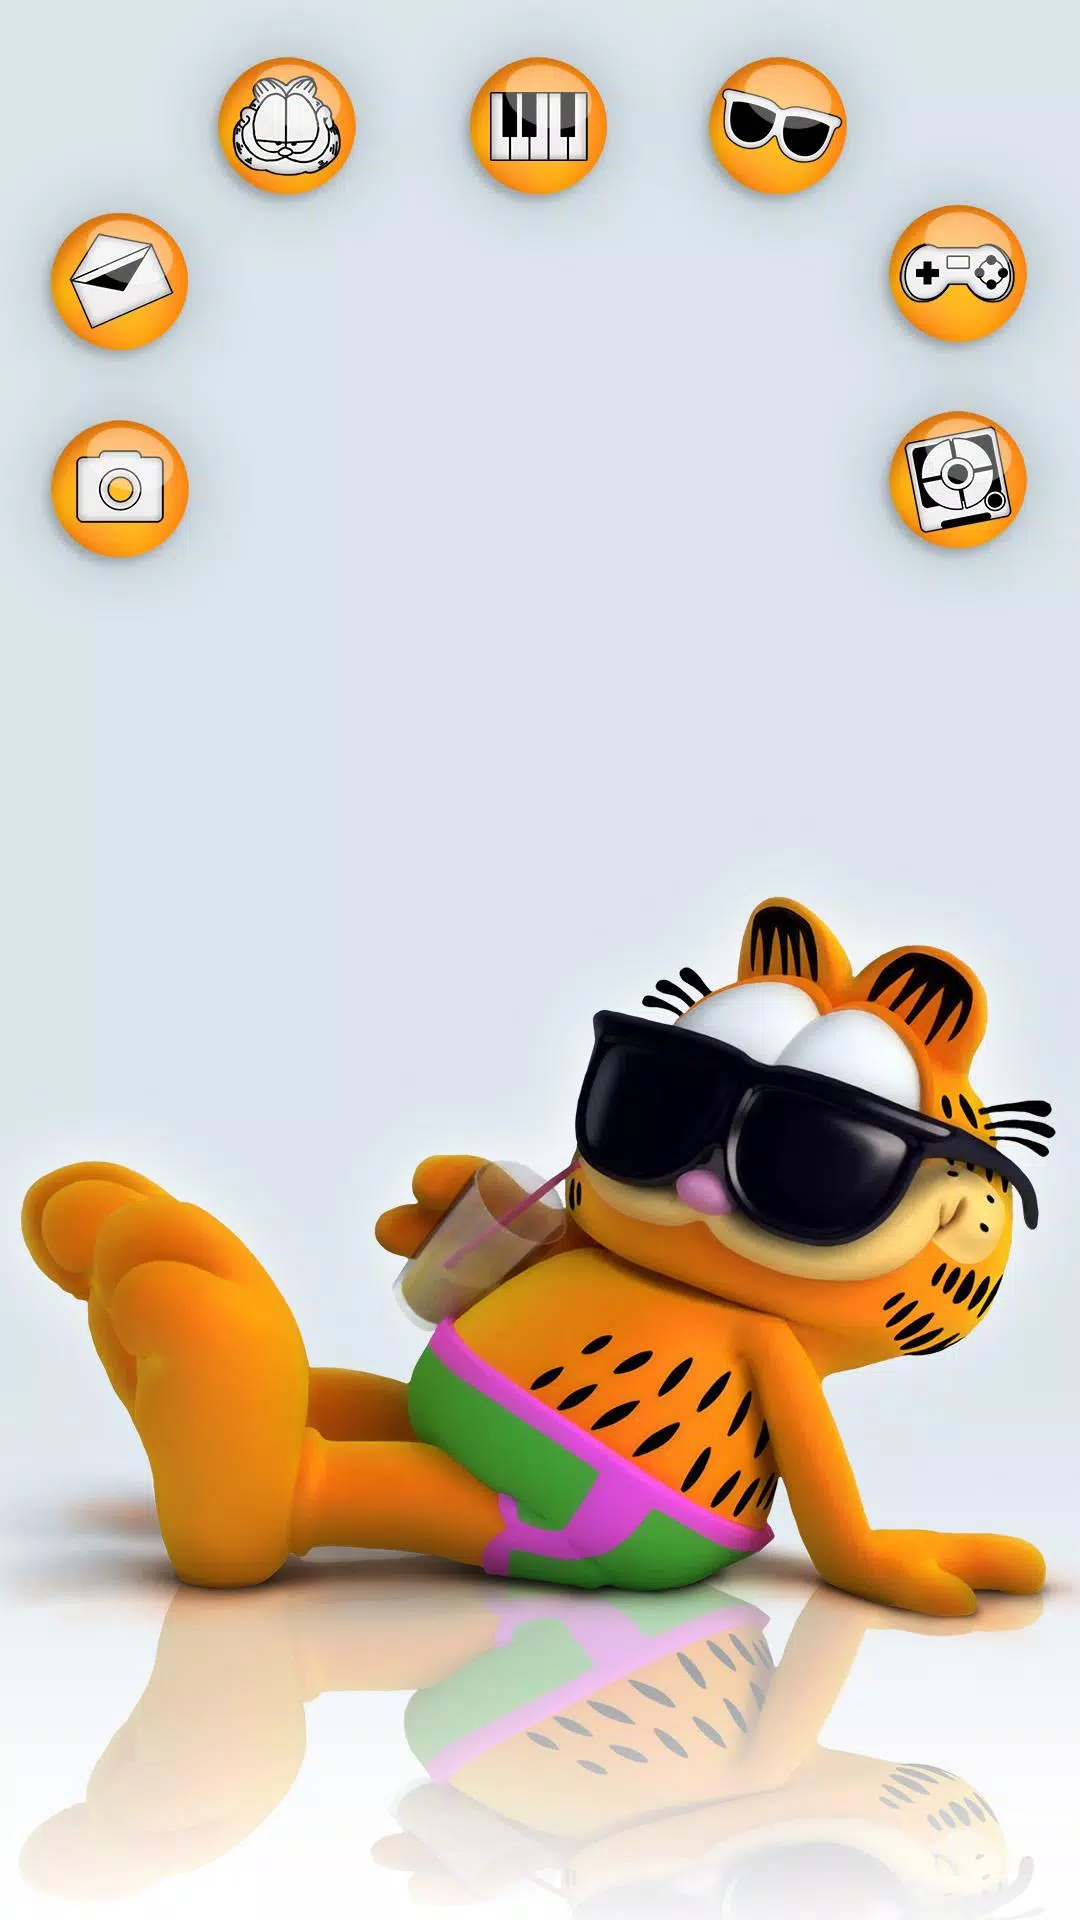 Download do APK de Garfield para Android